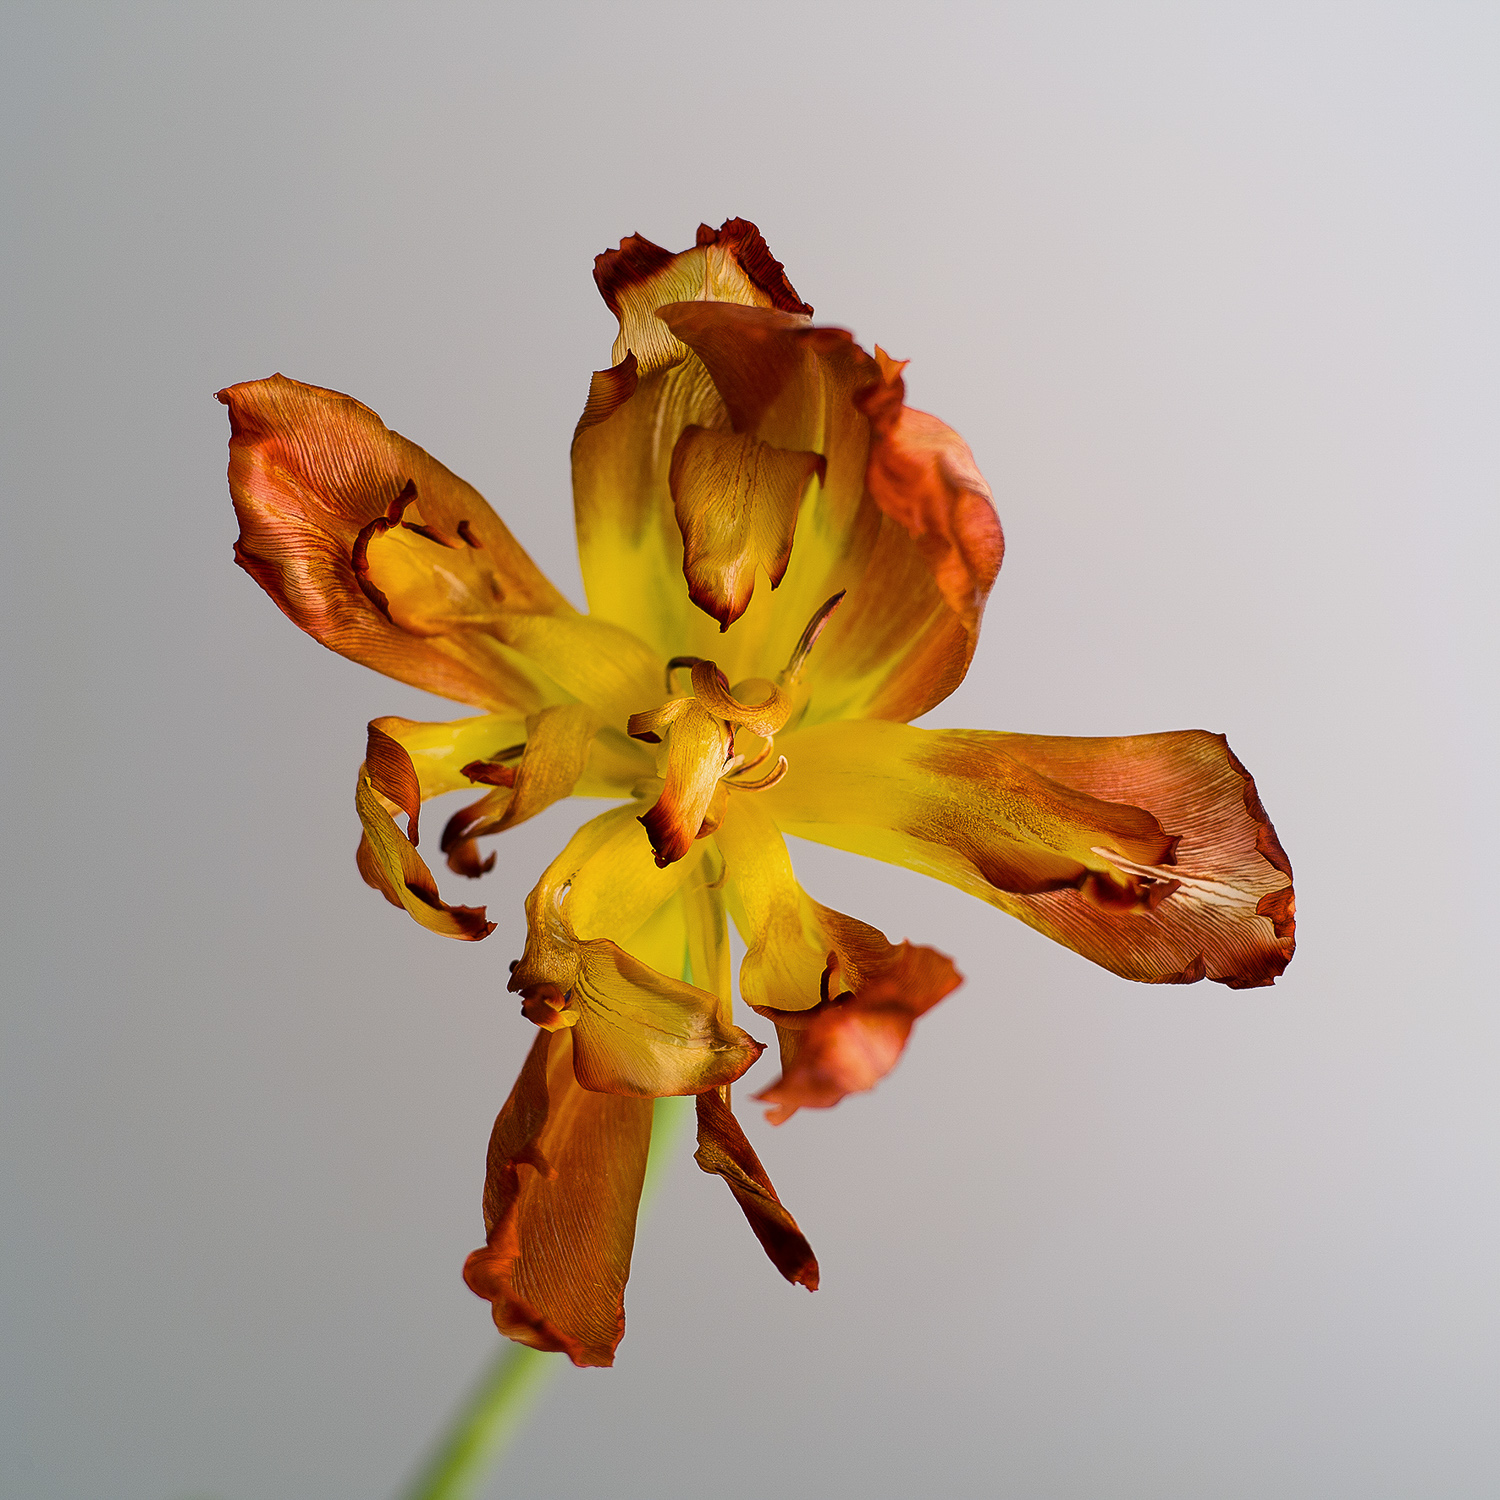 Tulip 　Taken in 2009　Size 1000mm x 1000mm　Archival pigment print　Alpolic finish（2009年撮影　1000mm角　アーカイバルピグメントプリント　アルポリック仕上げ）